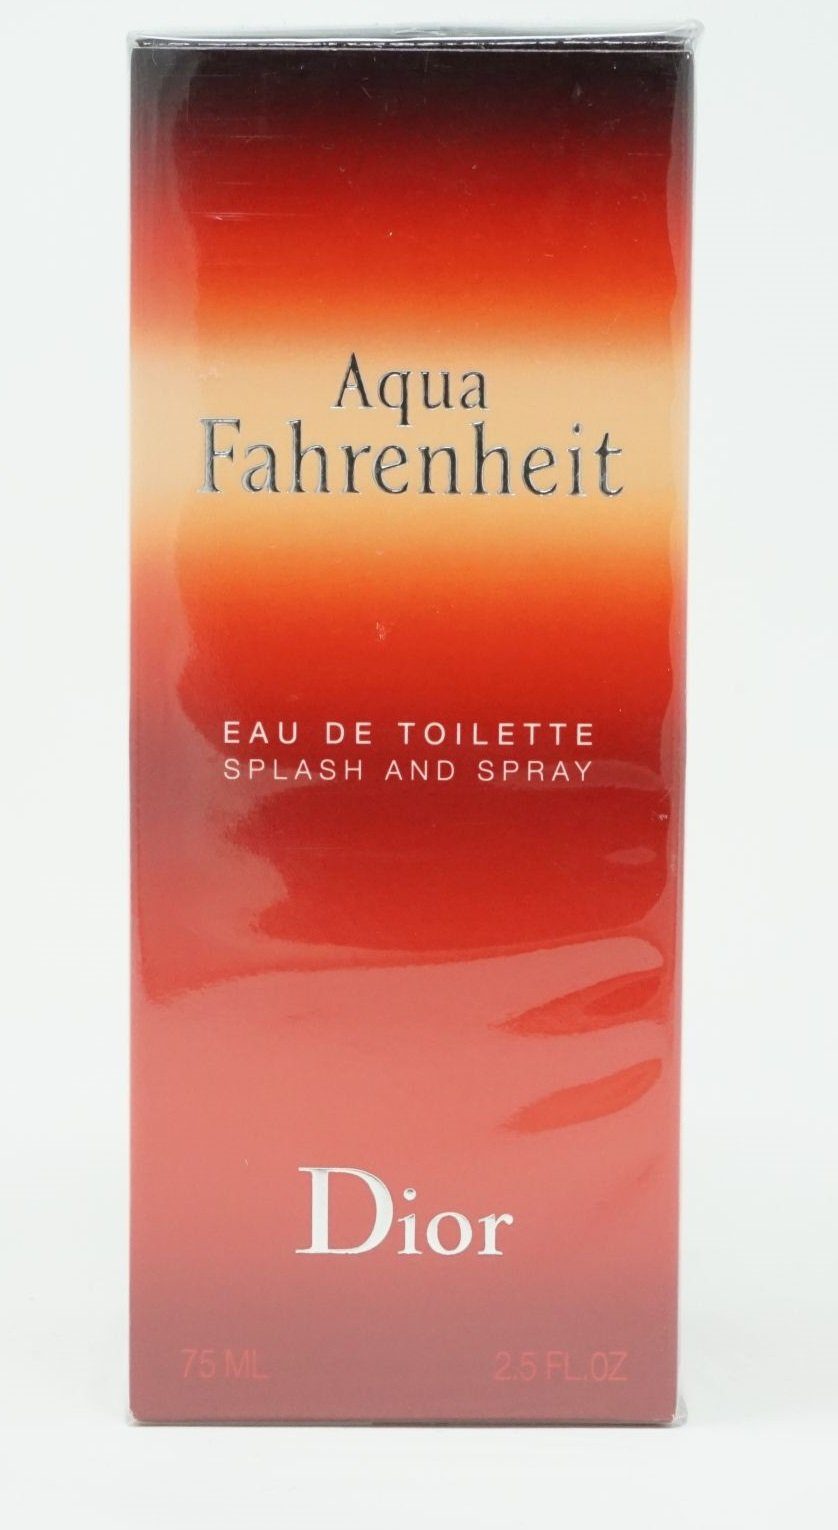 Fahrenheit Eau Dior Dior Toilette Splash de Toilette and 75ml Aqua Eau Spray de